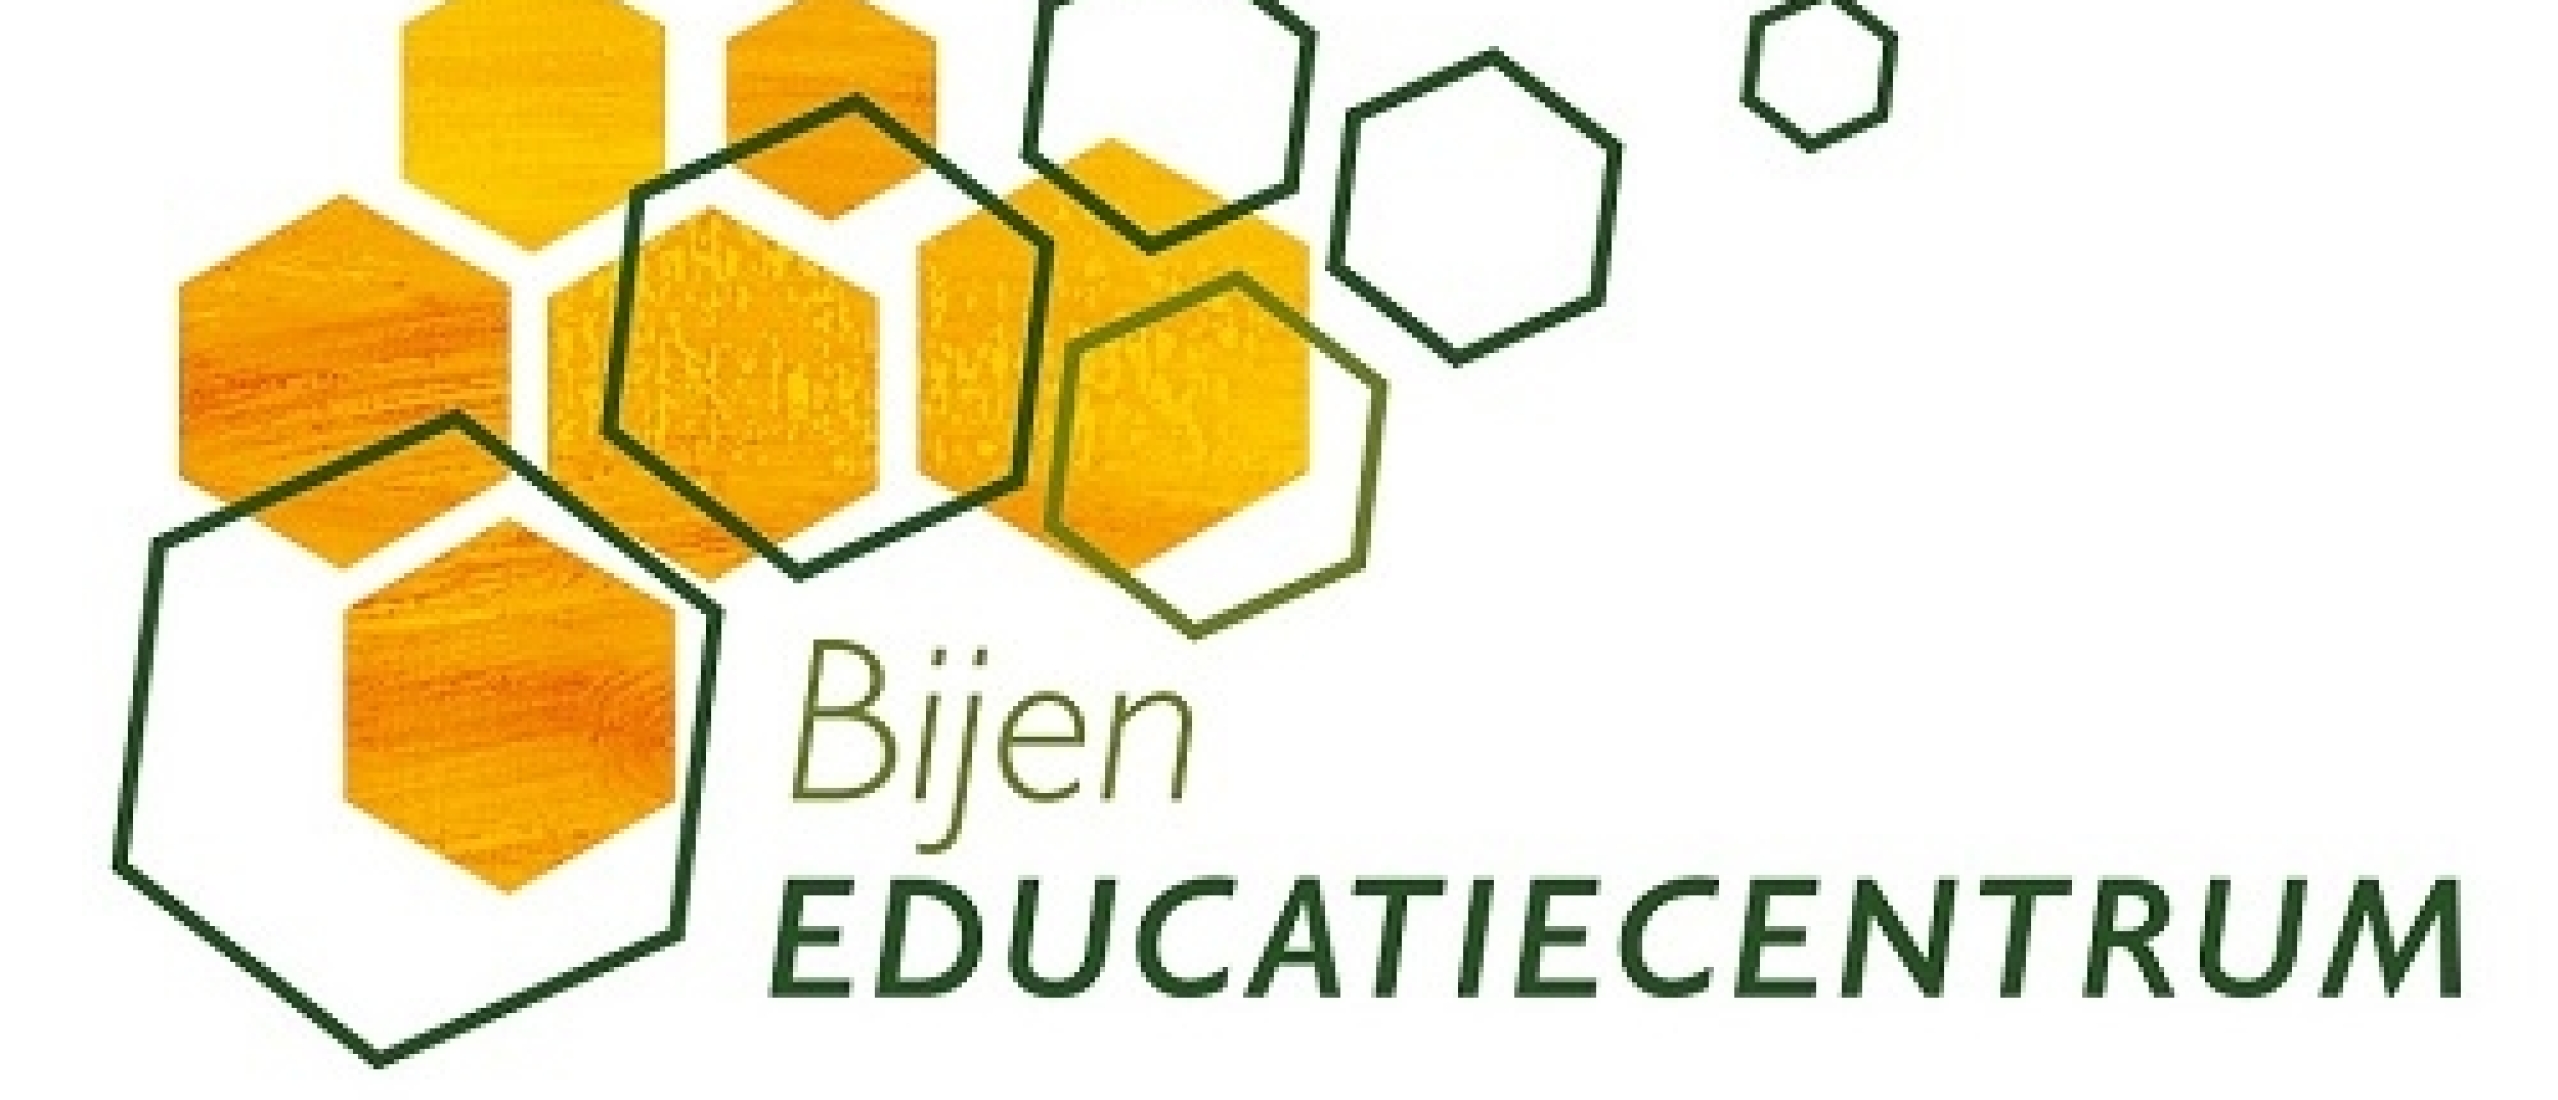 Bijen Educatiecentrum logo